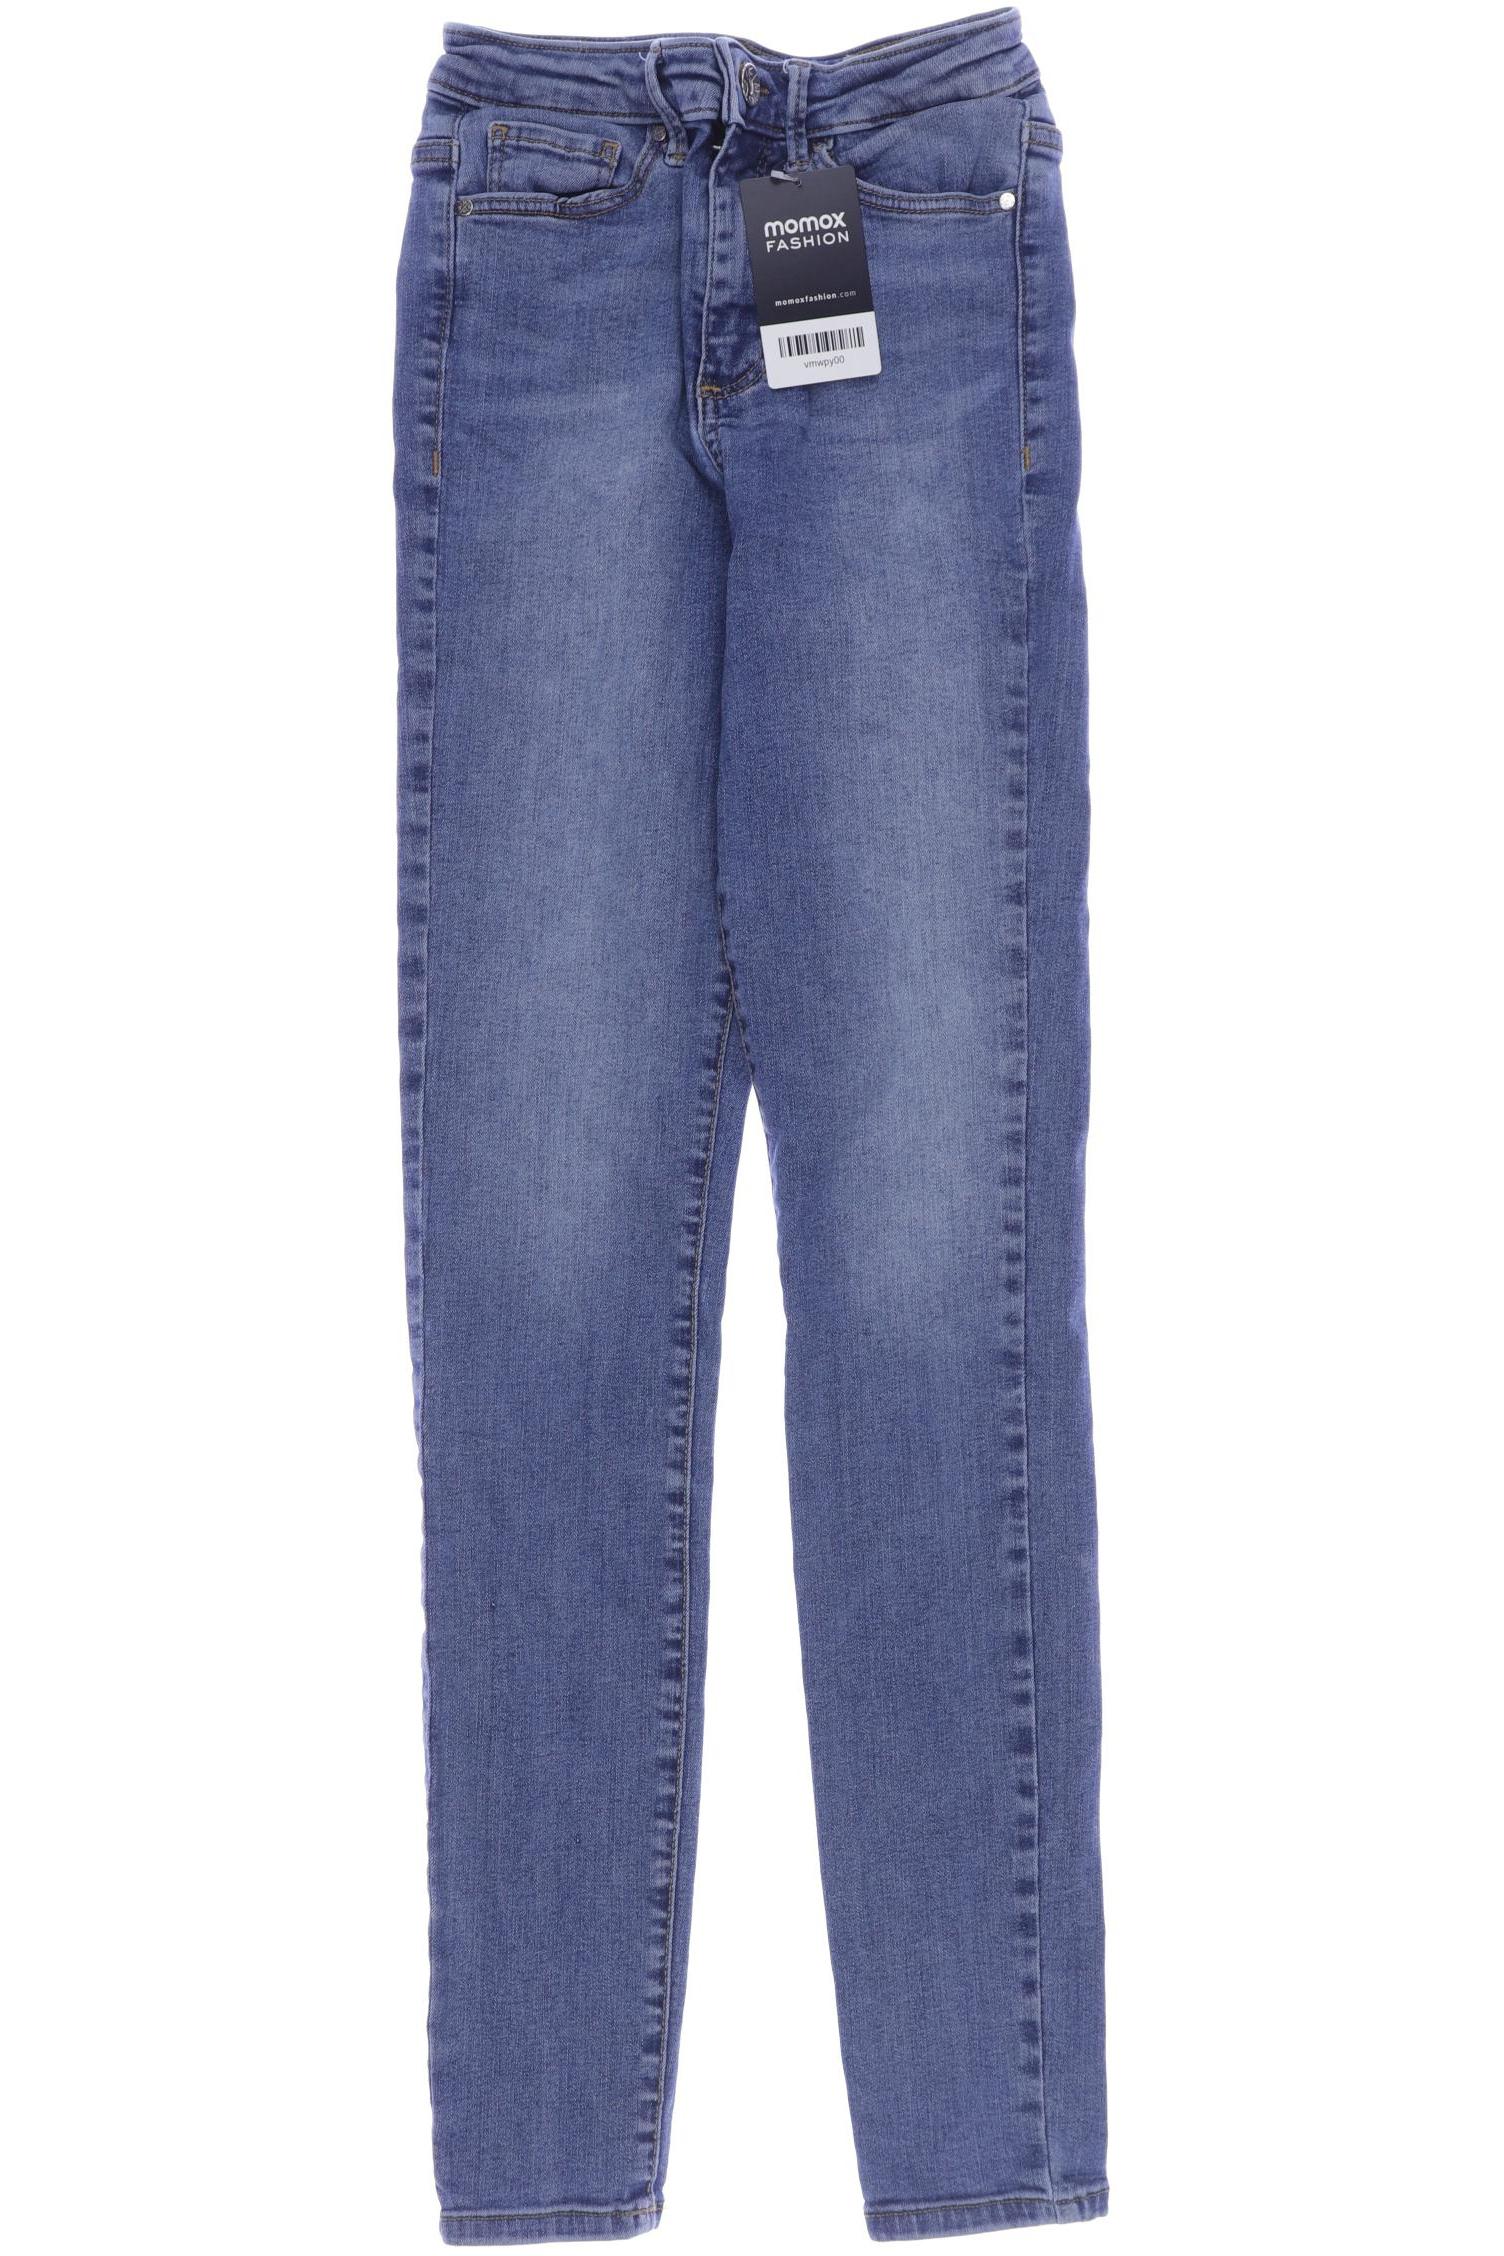 Vero Moda Damen Jeans, blau, Gr. 122 von Vero Moda